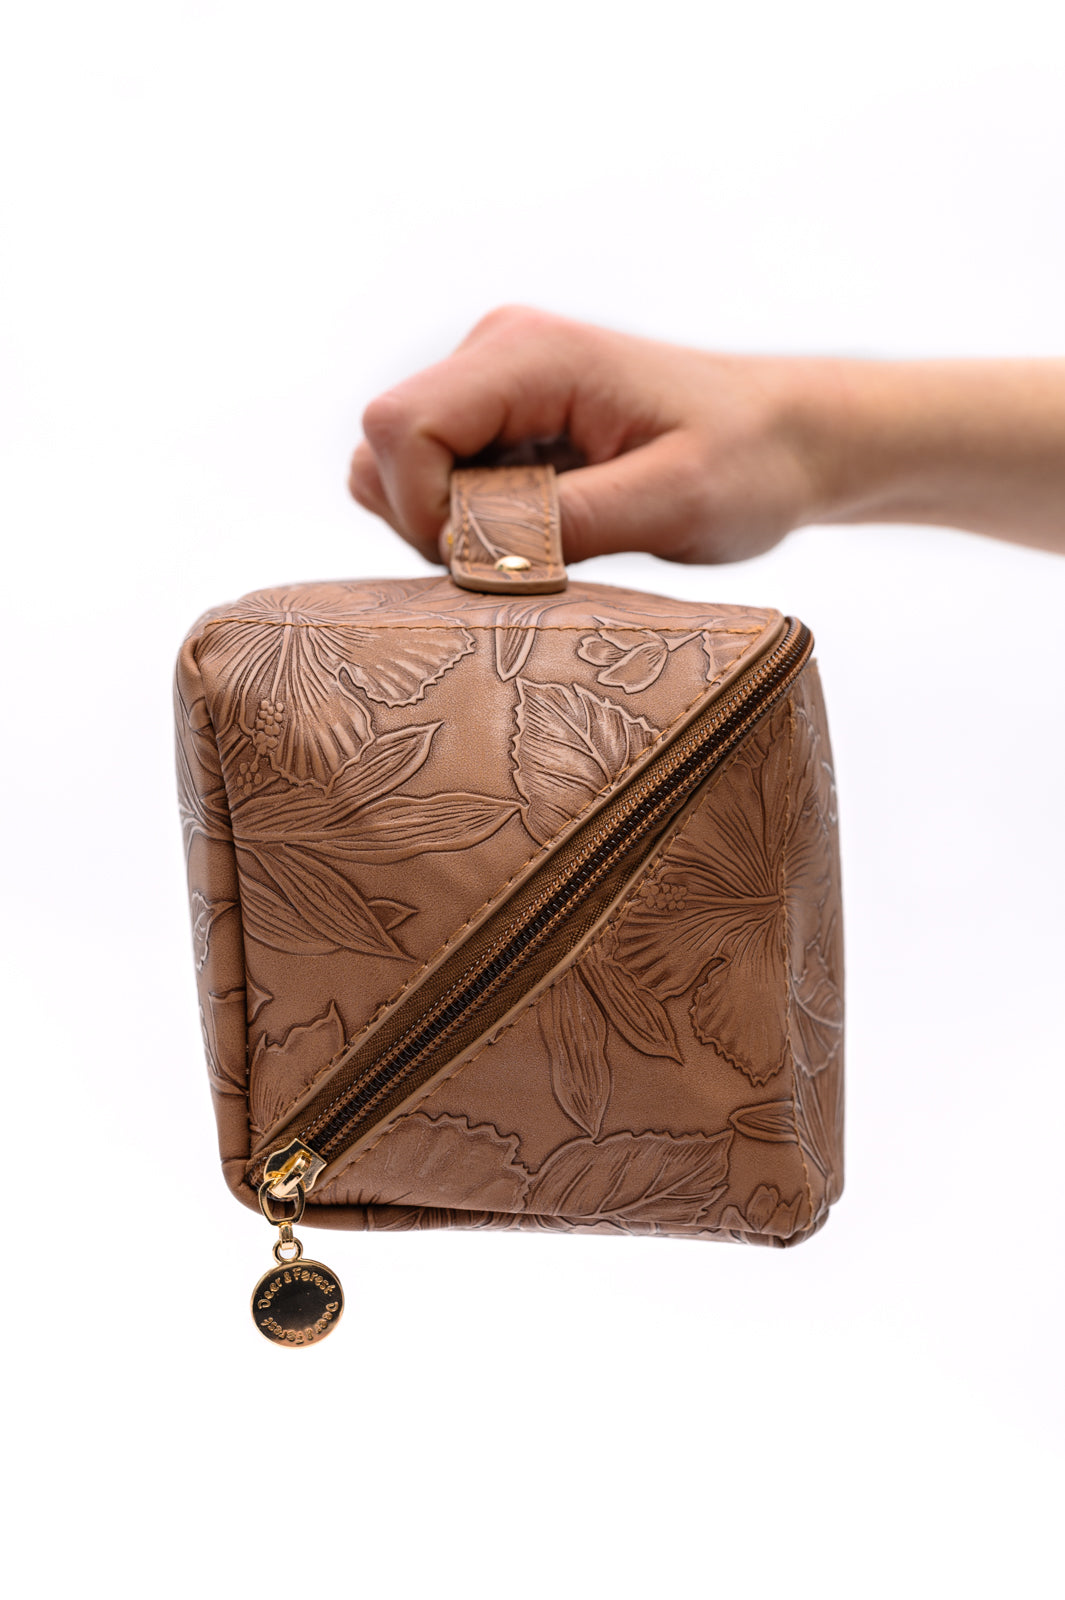 Life In Luxury Large Capacity Cosmetic Bag in Tan **FINAL SALE**